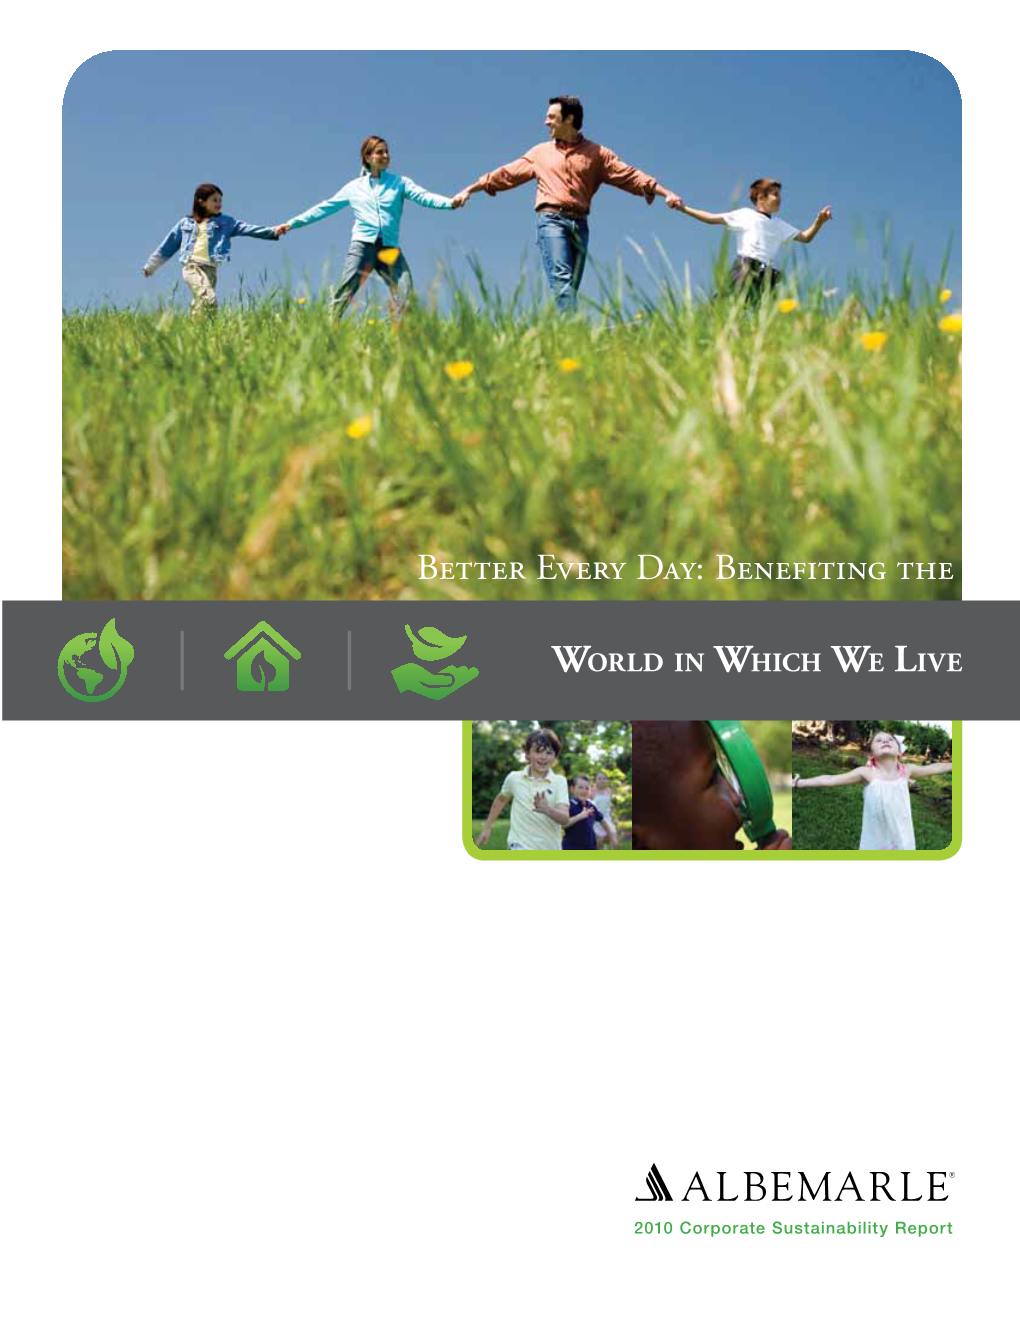 Sustainability Report on 2010 Activities